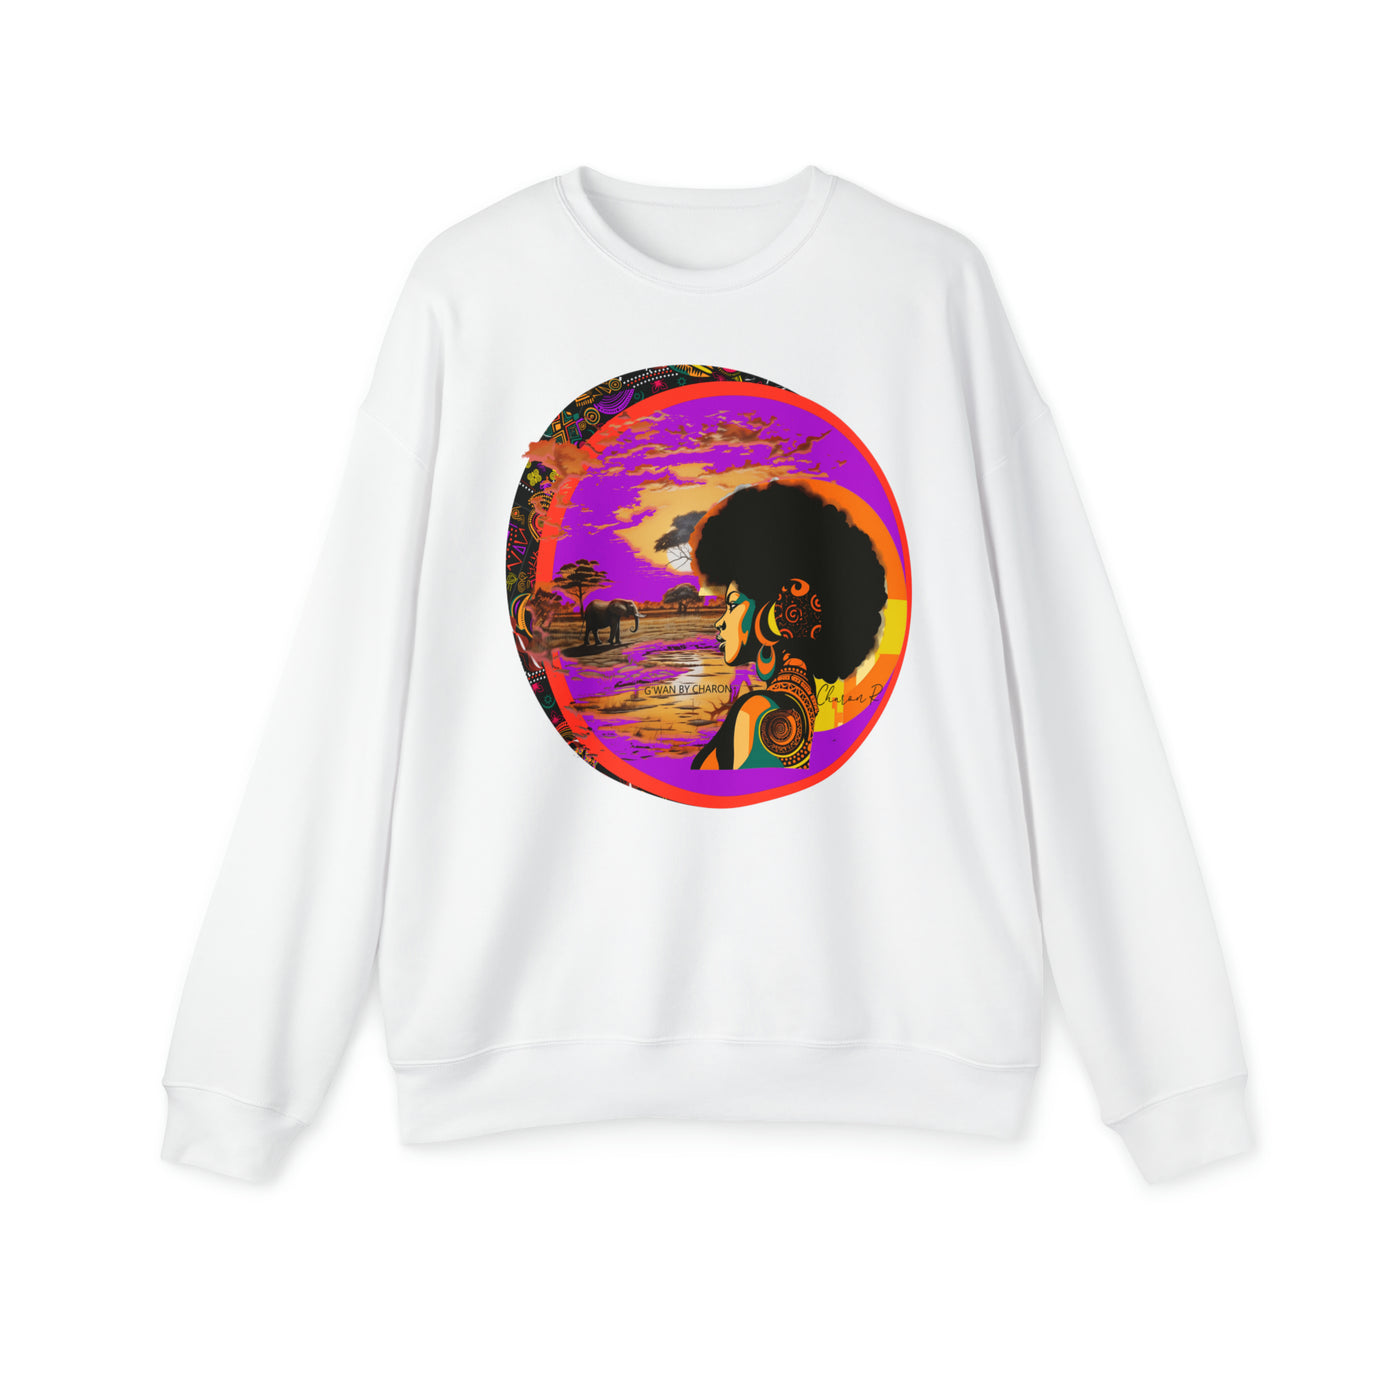 Sarafina Glam Sweatshirt |Surge Collection - G'wan by Charon